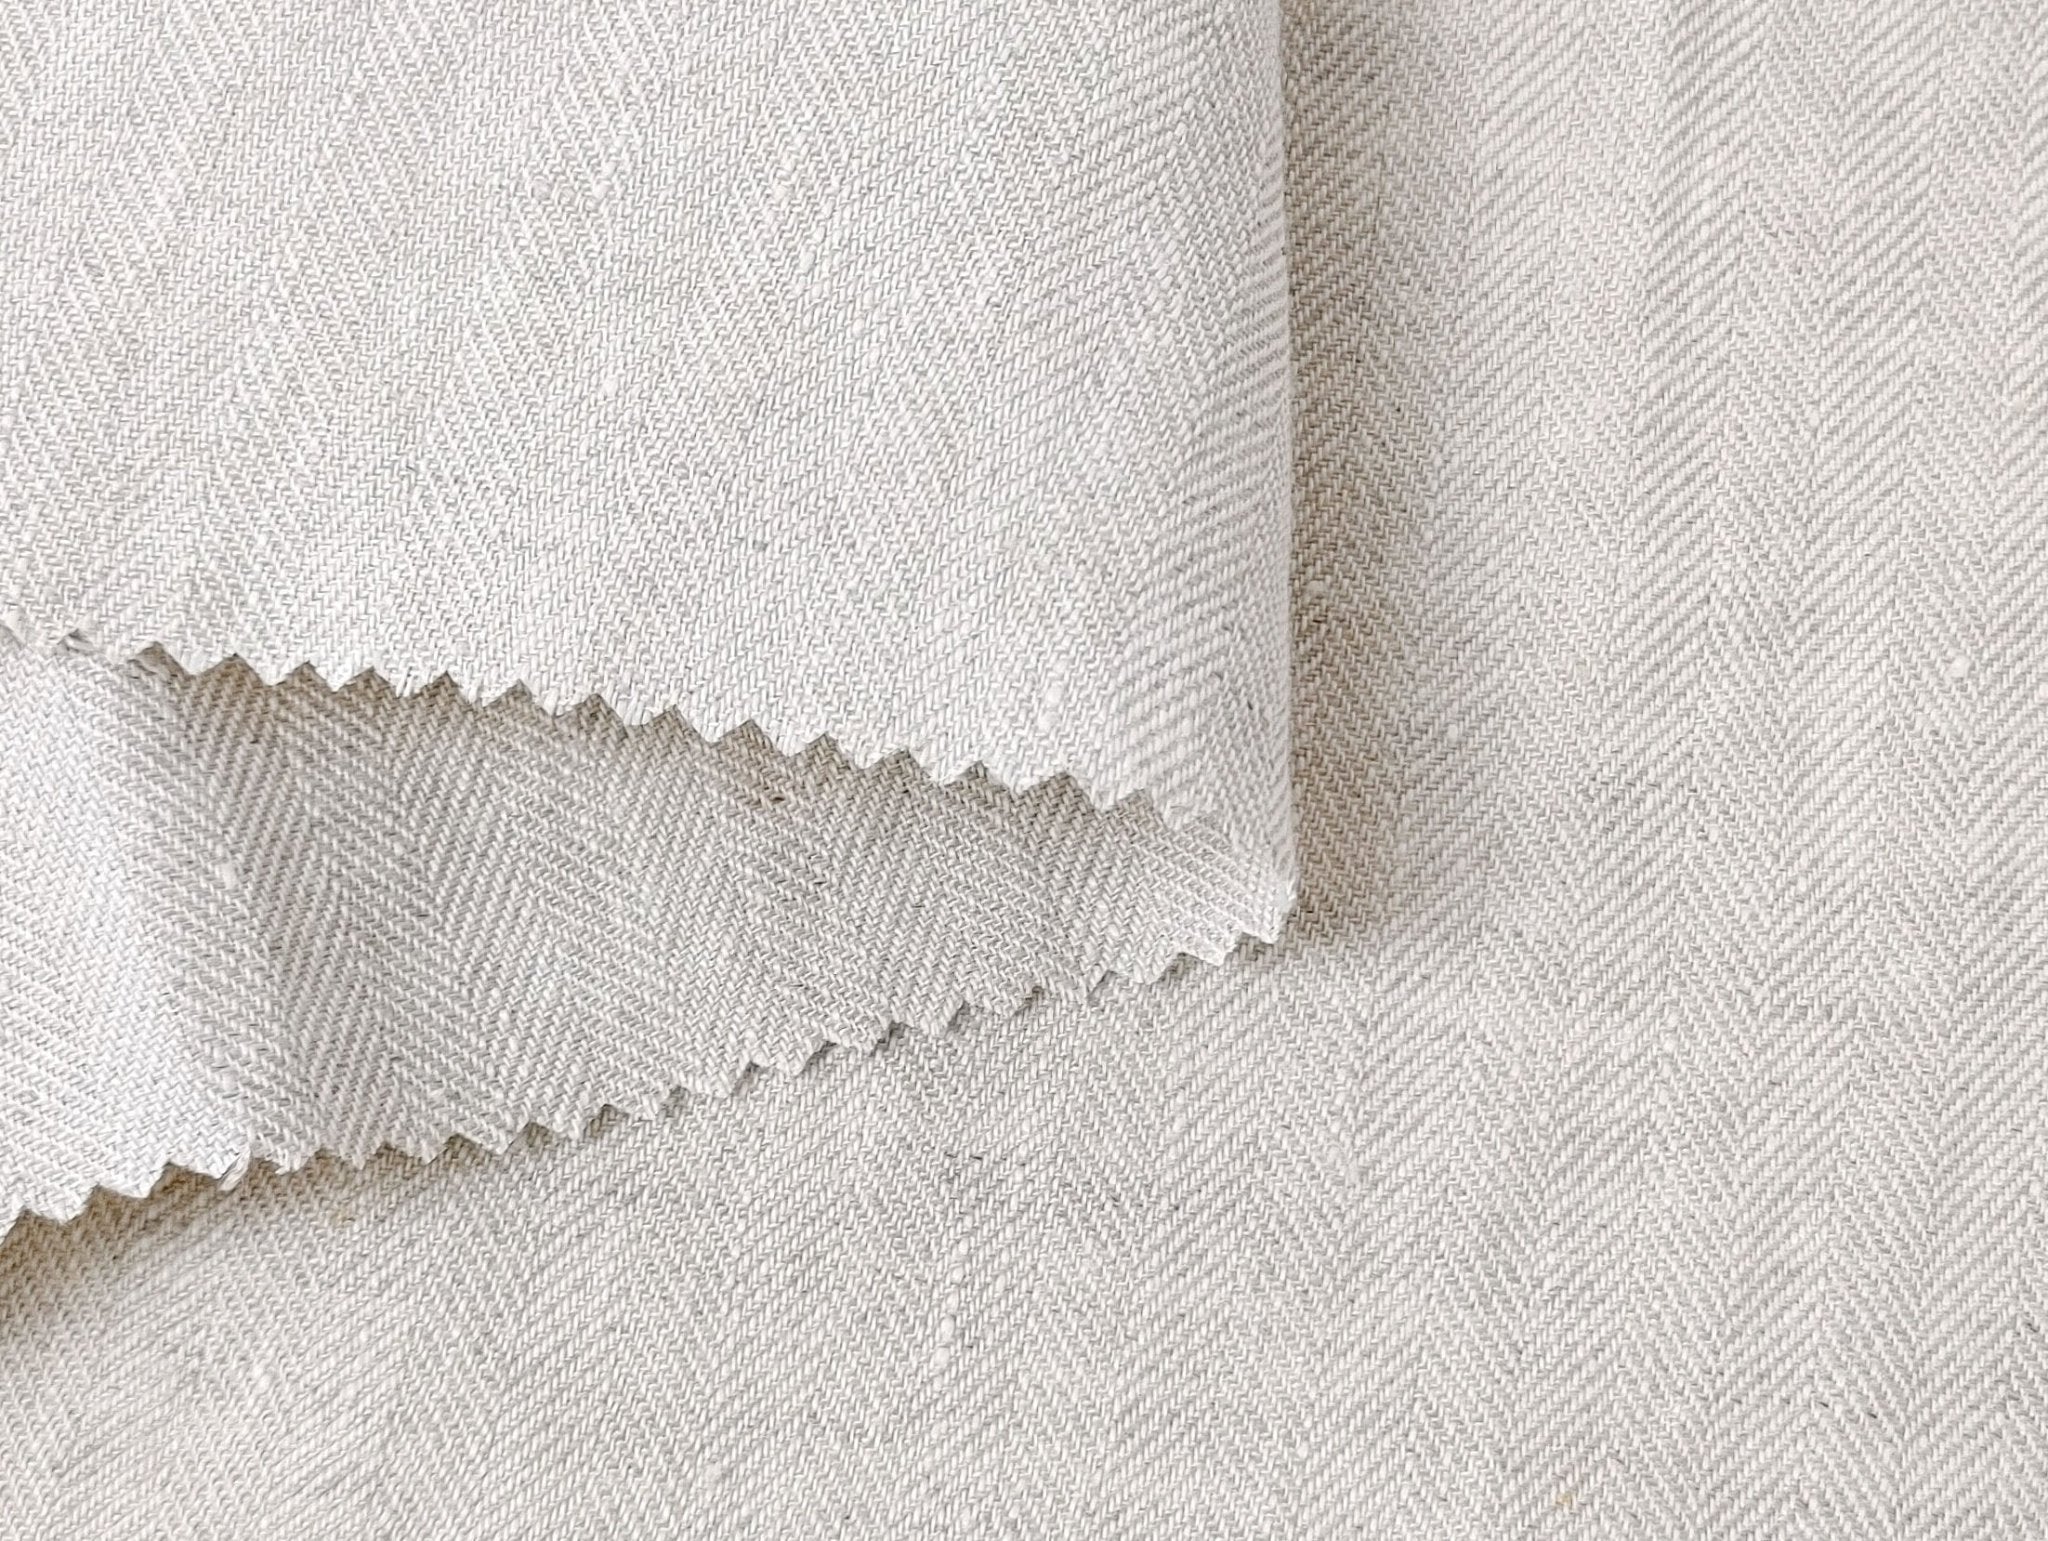 100% Linen Herringbone Twill HBT Fabric medium weight chambray 7313 7314 7727 7529 - The Linen Lab - Khaki